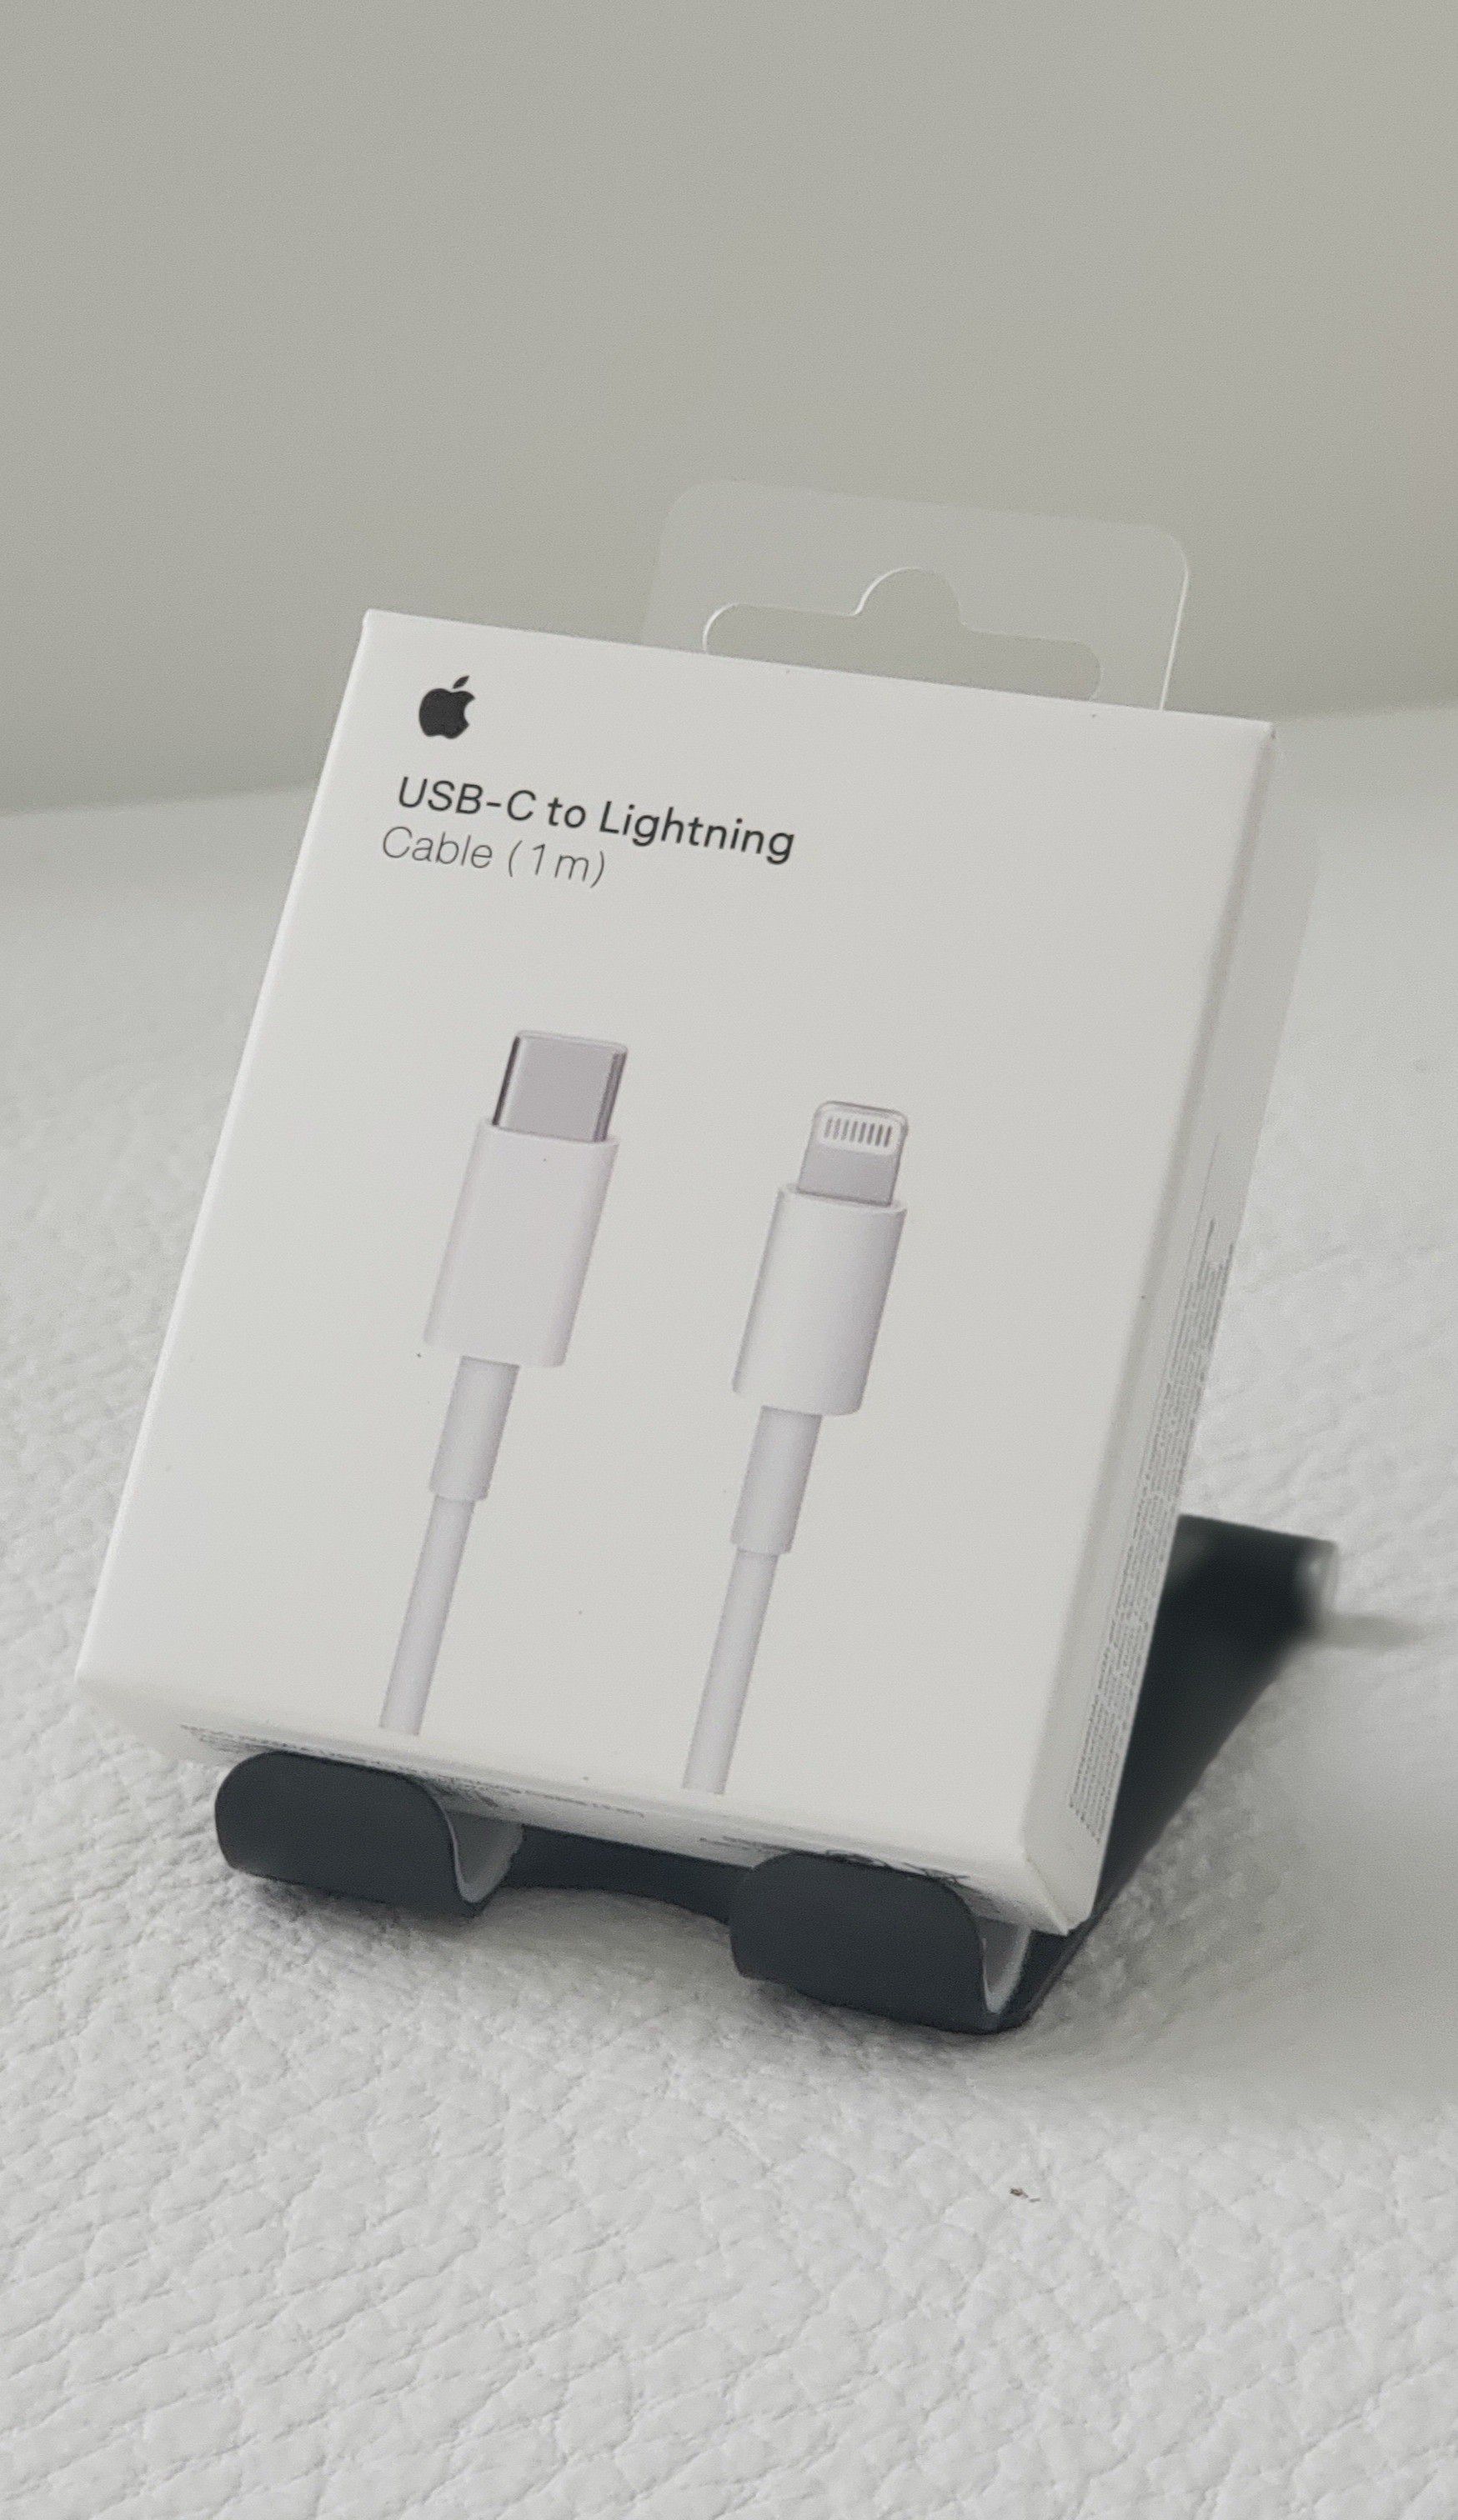 USB-C Lighting Cable (1m) $10